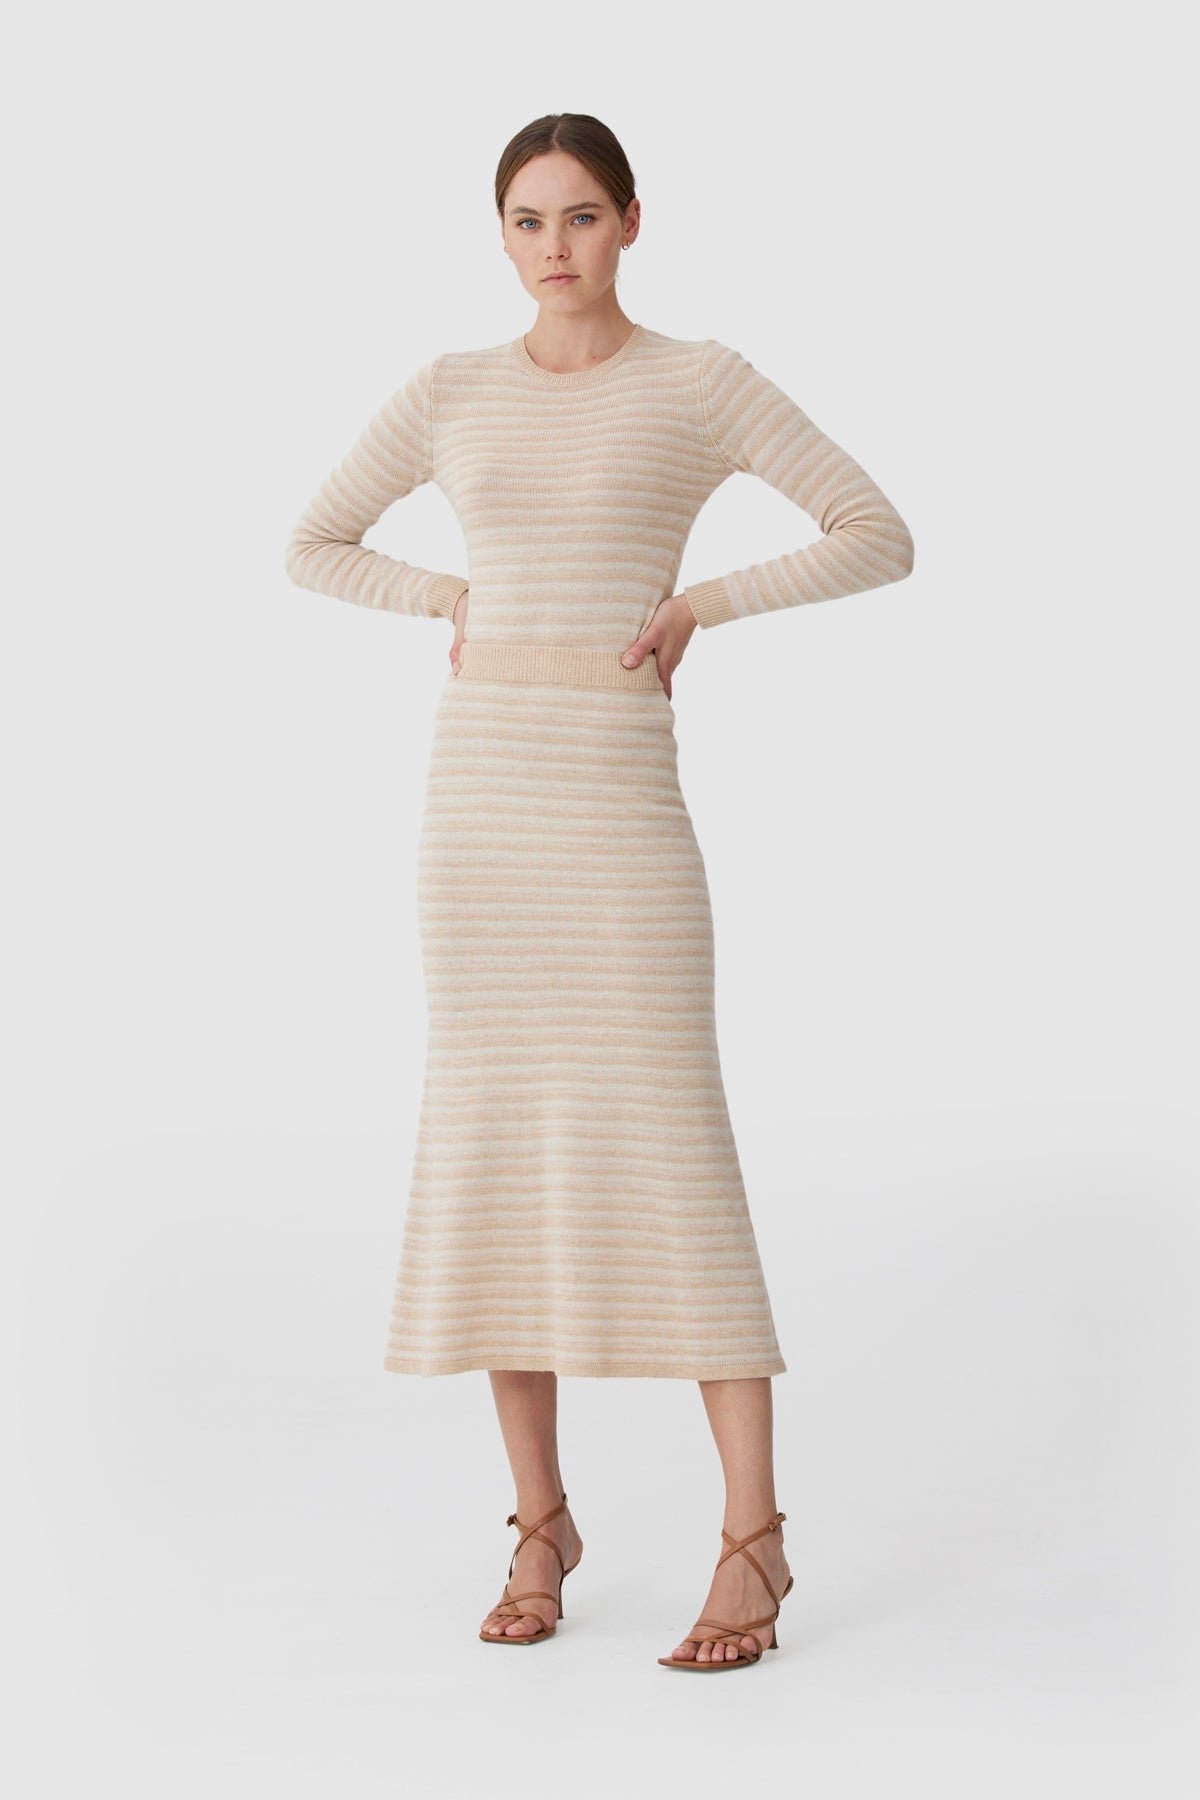 Keepsake - Oceana Knit Skirt - Camel Stripe